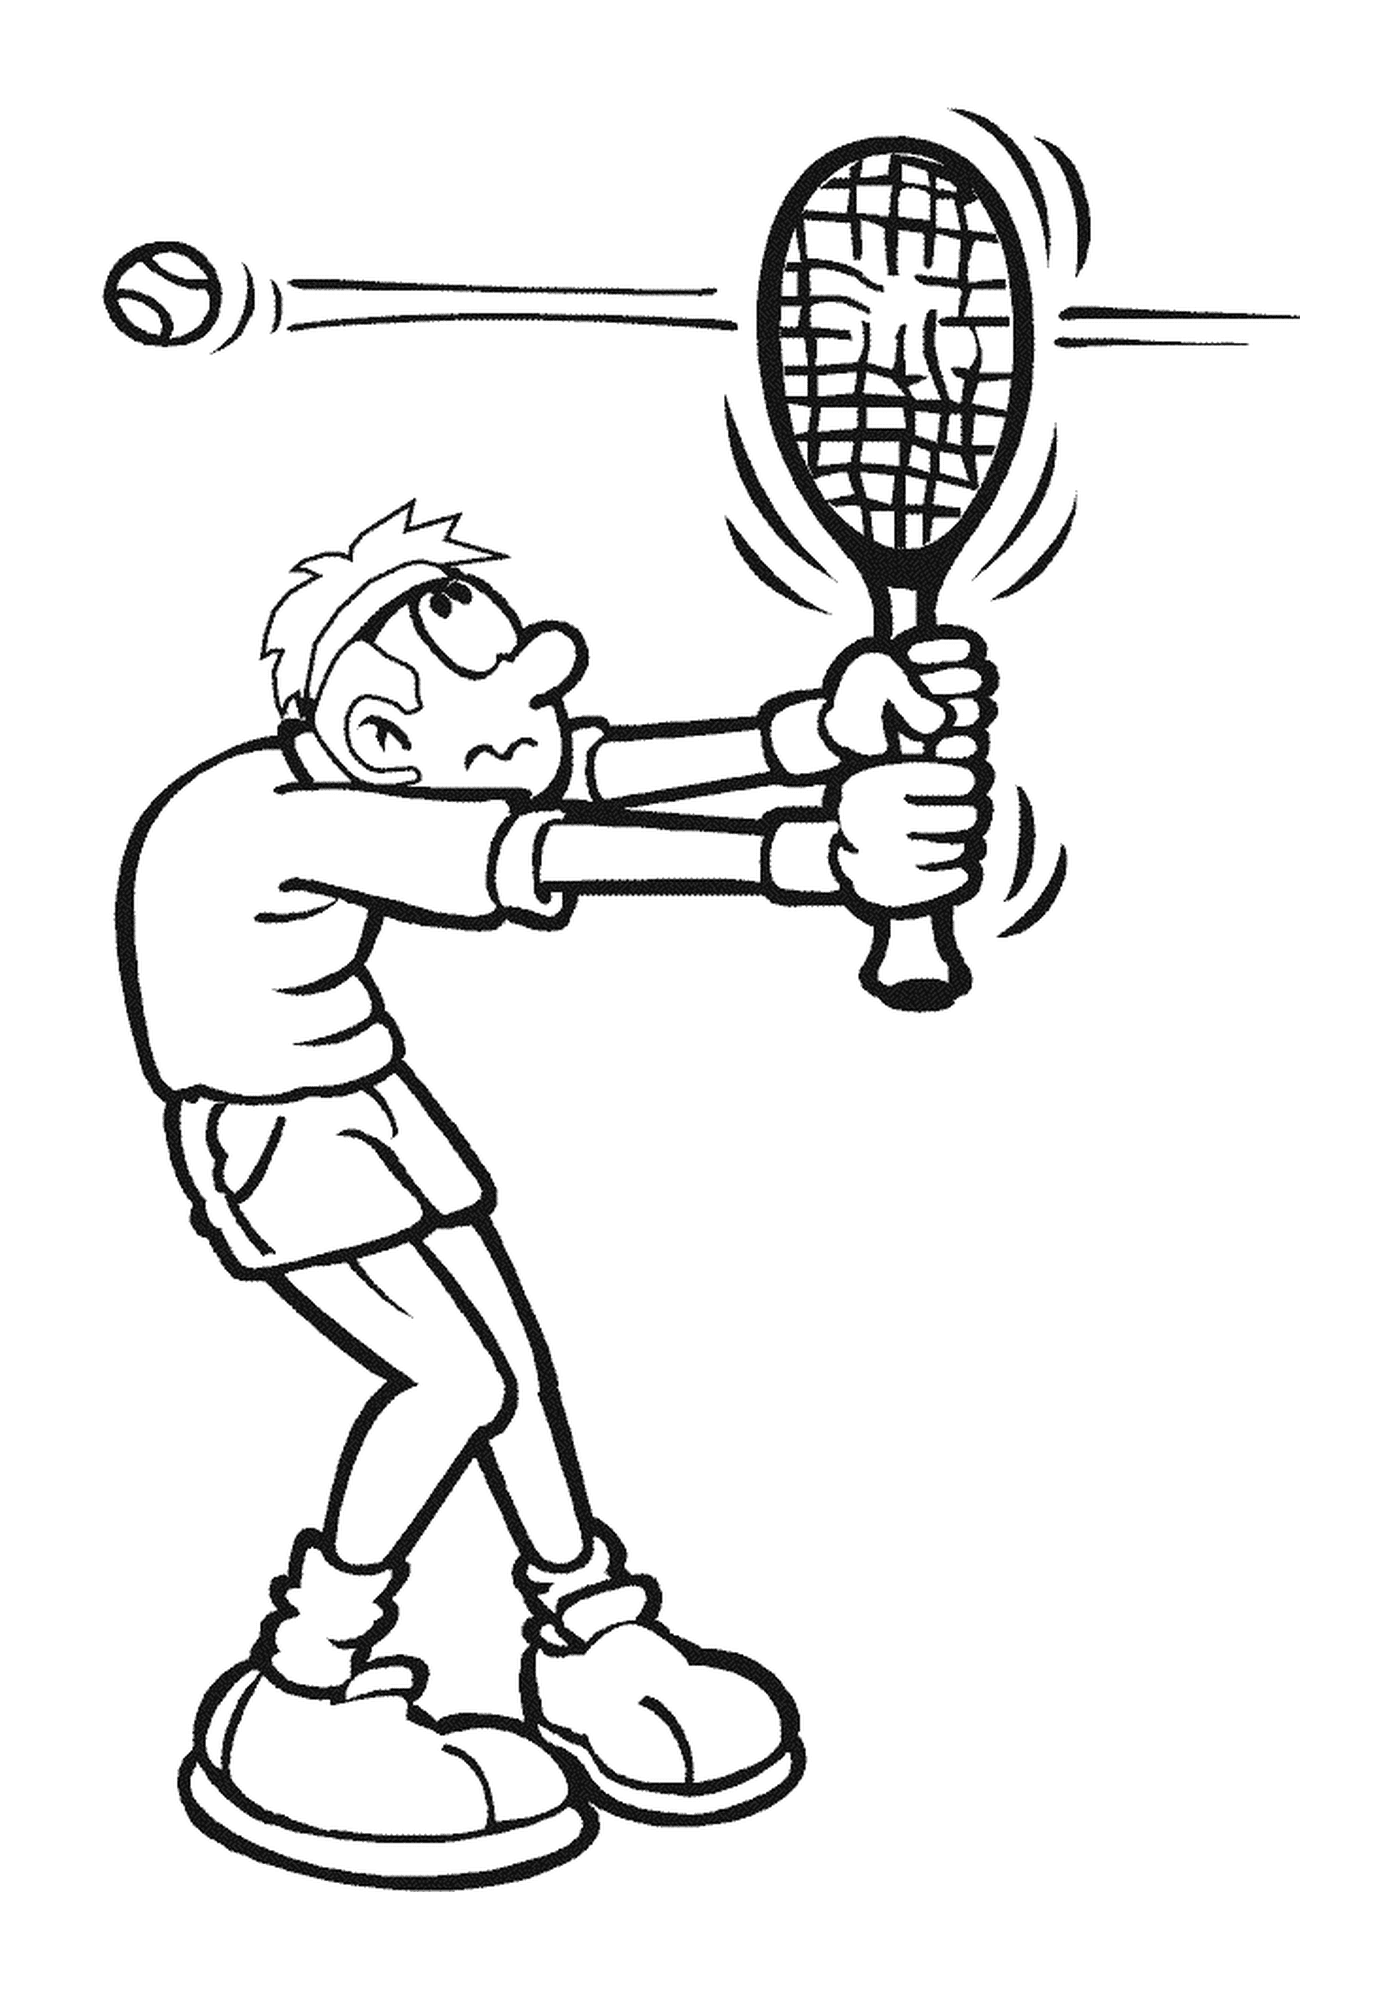   homme tient raquette tennis 